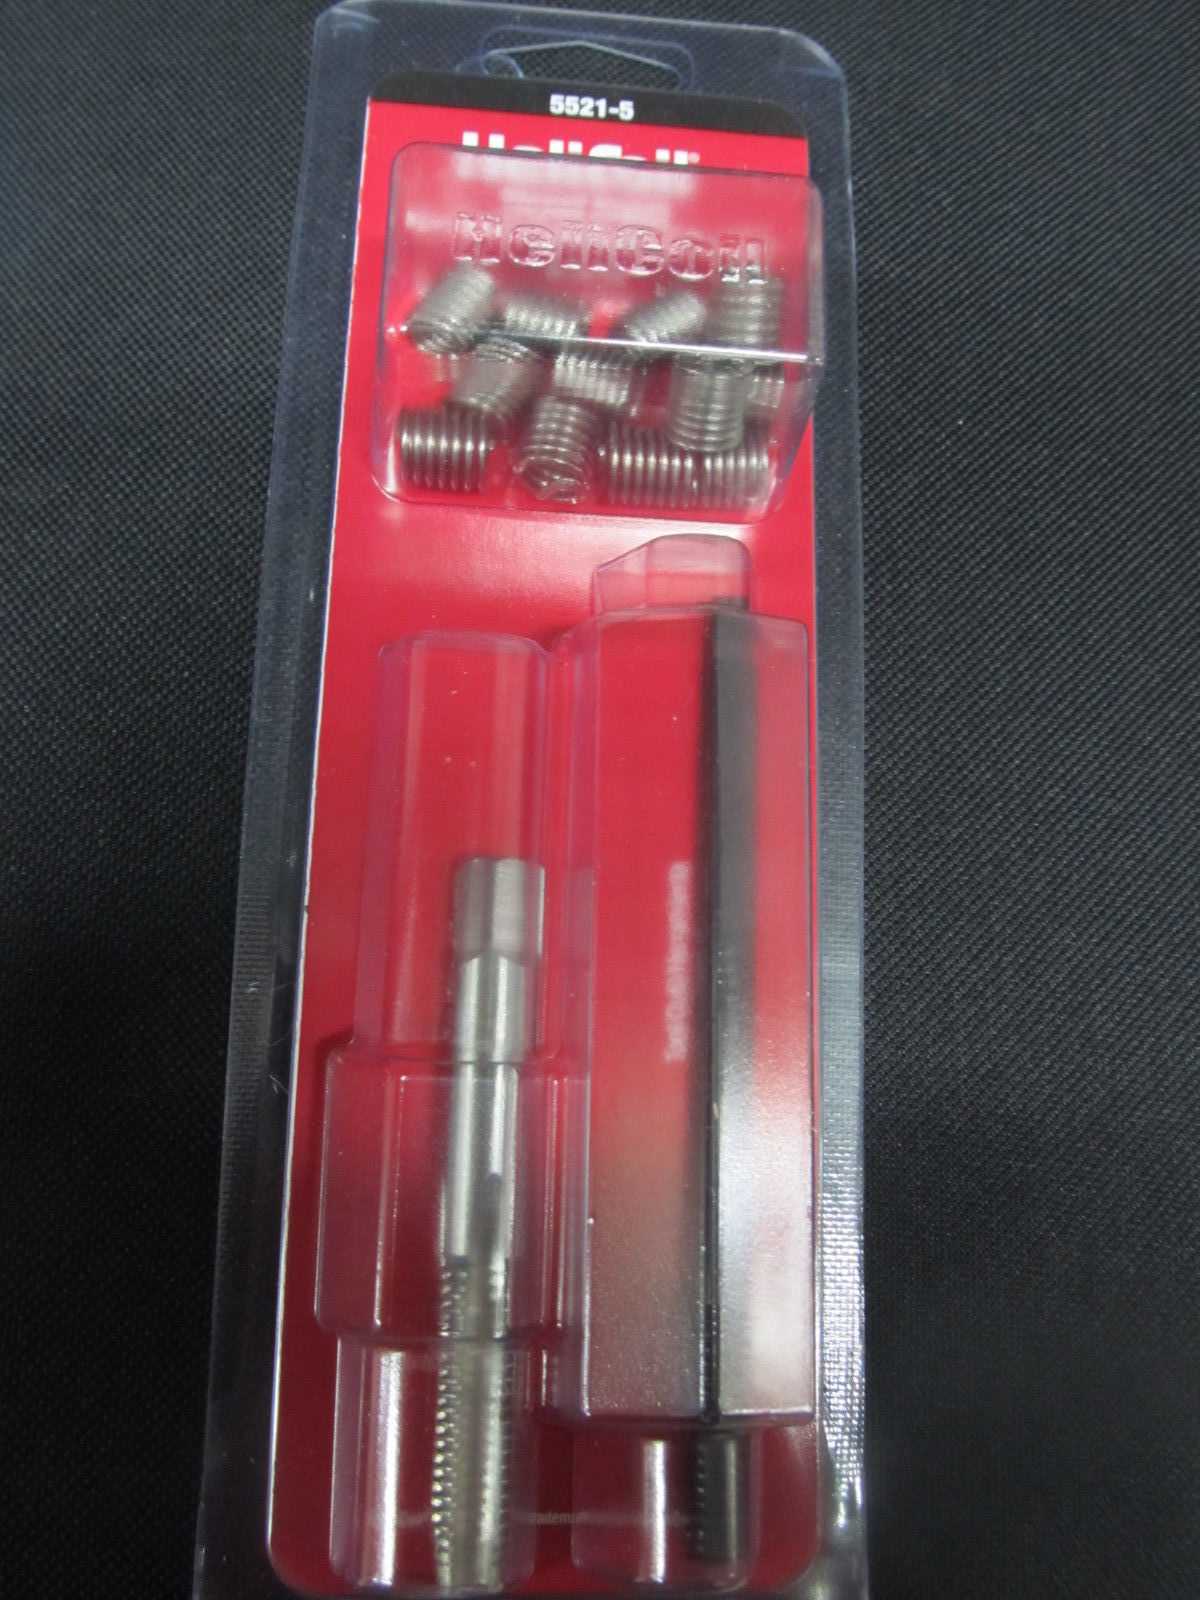 5521-5 Helicoil Thread Repair Kit Universal